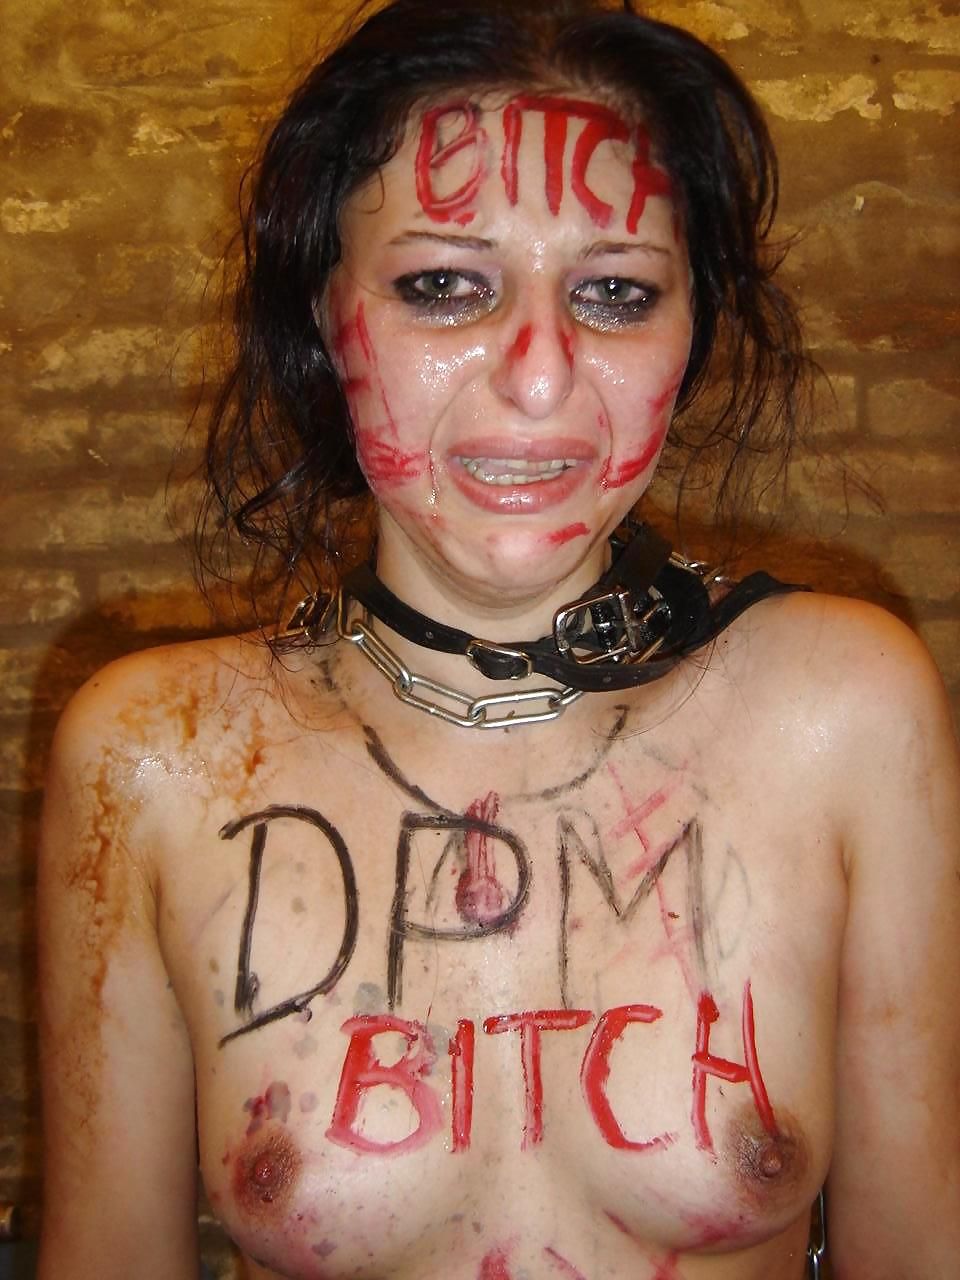 bitch, DPM, bitch, slave